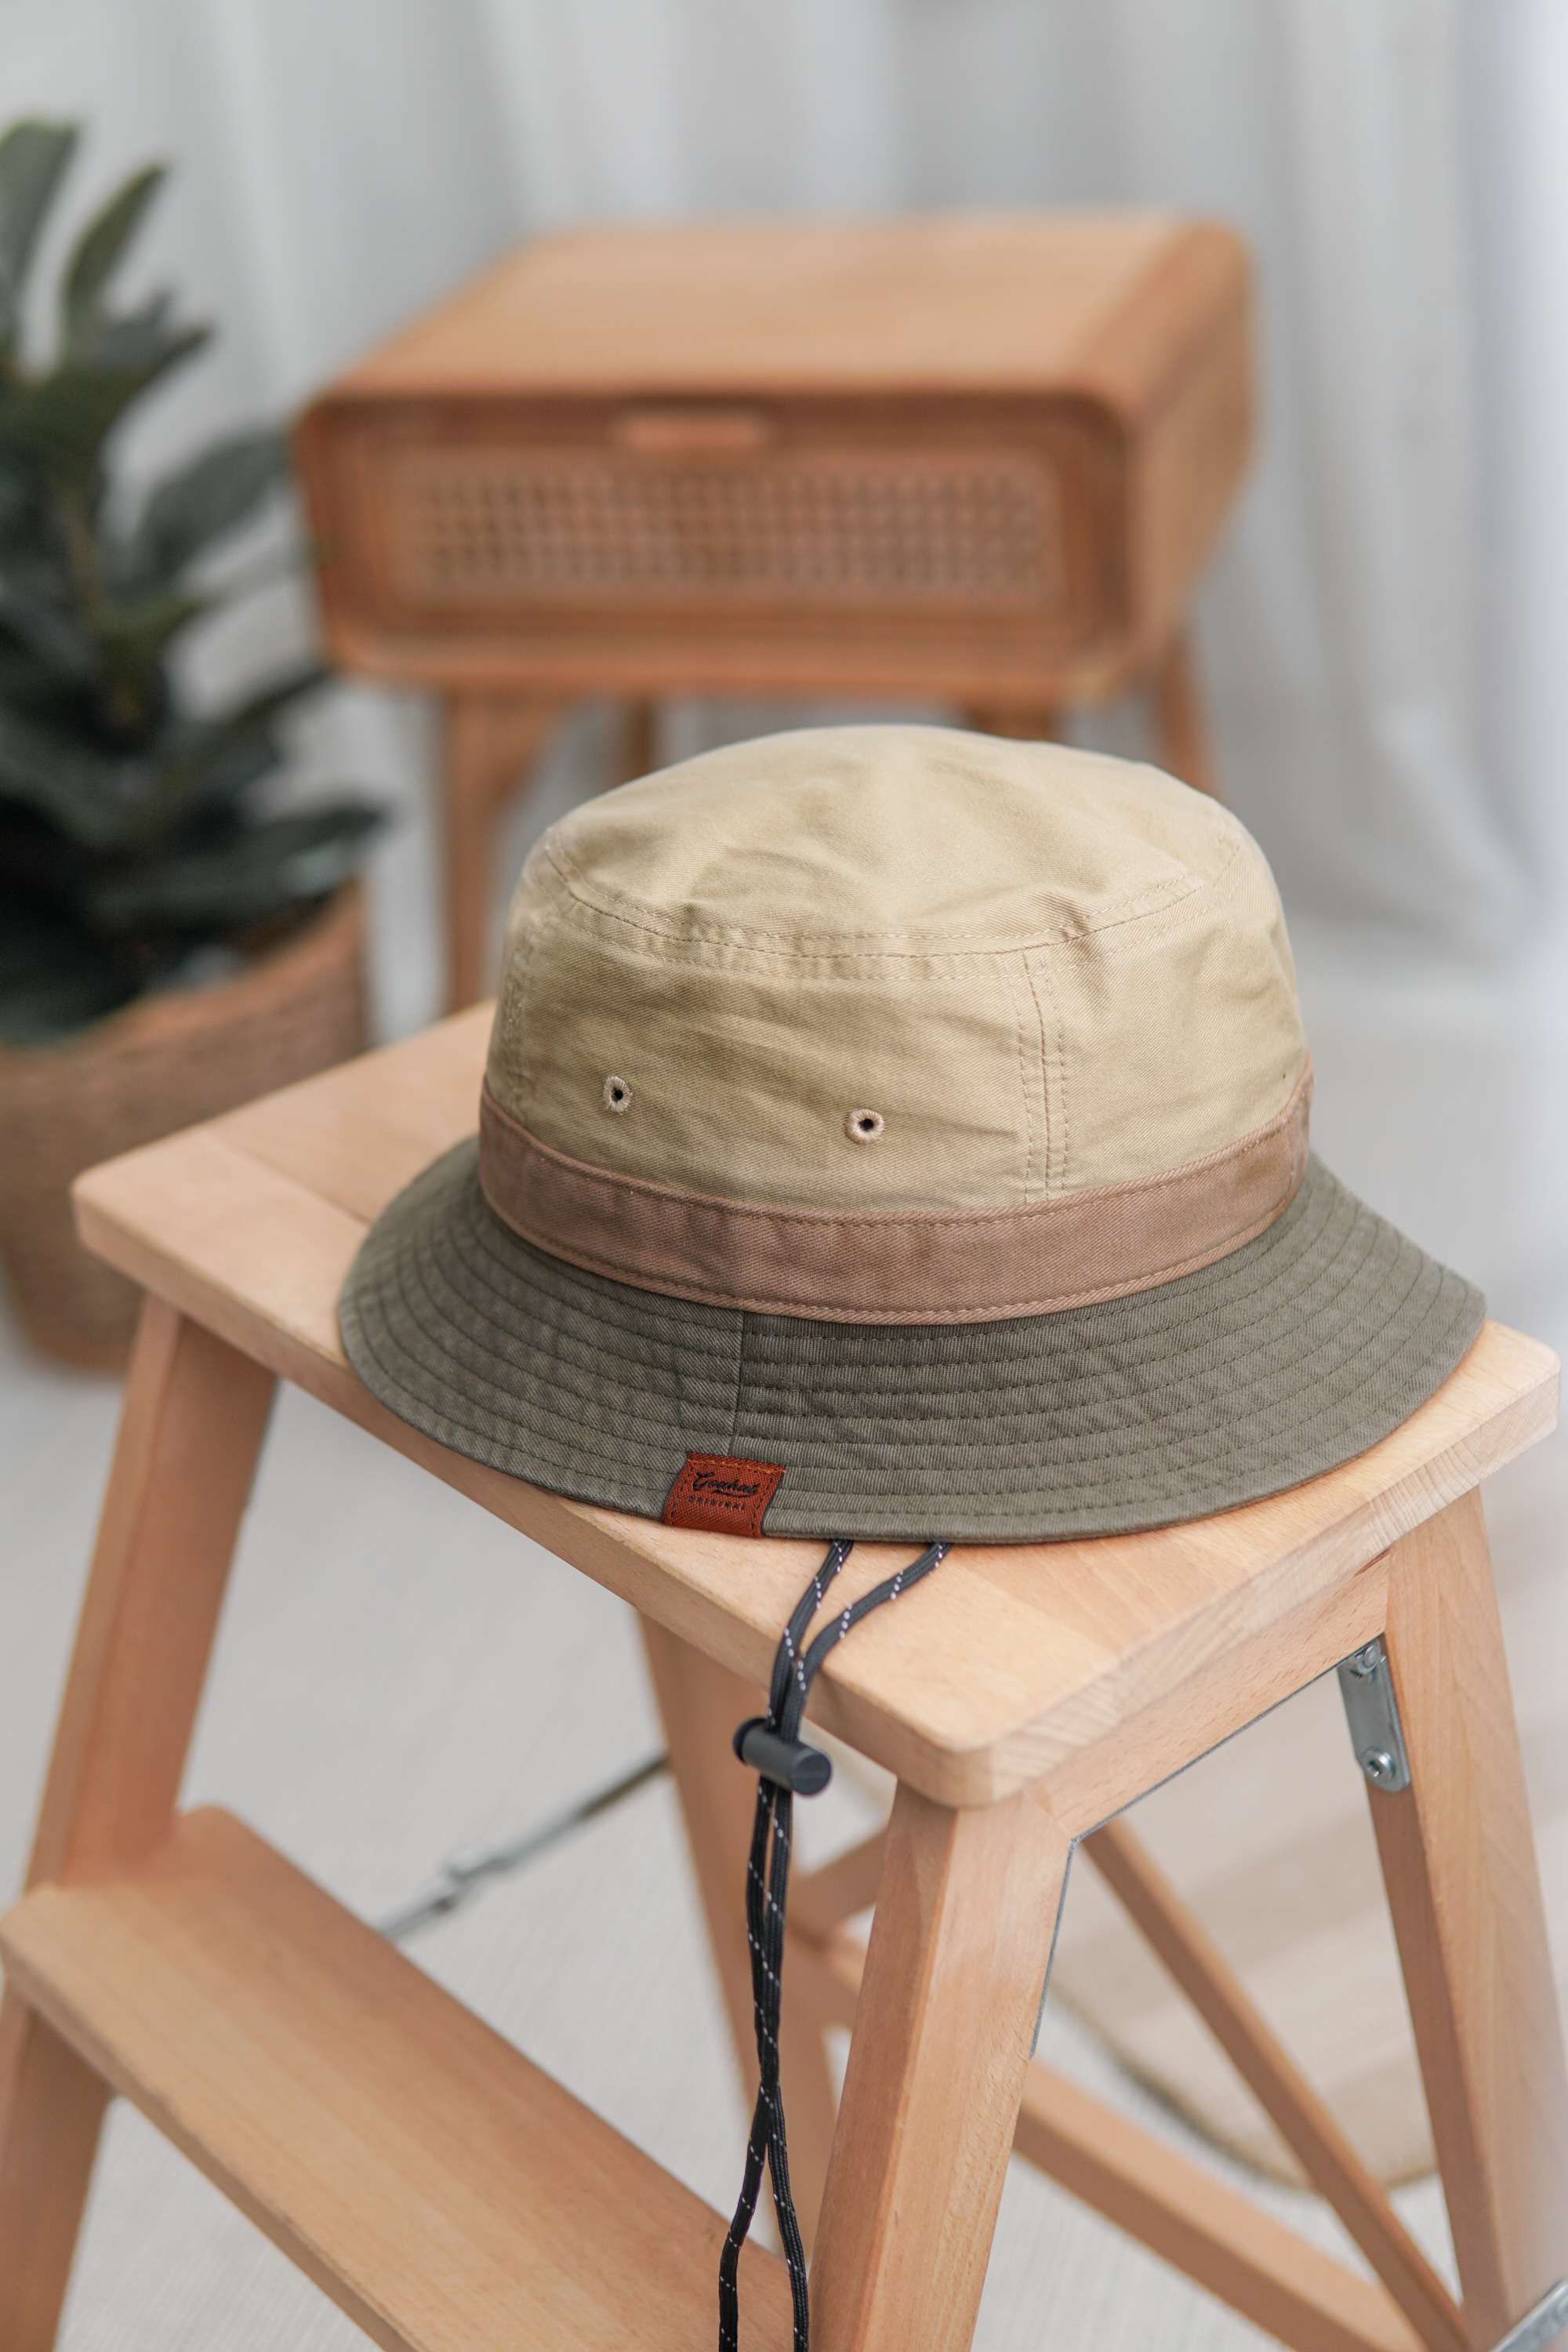 G113 Vintage หมวกเดินป่า ทรงบักเก็ต สายพาราคอร์ด งานสวย เบา ใส่สบาย